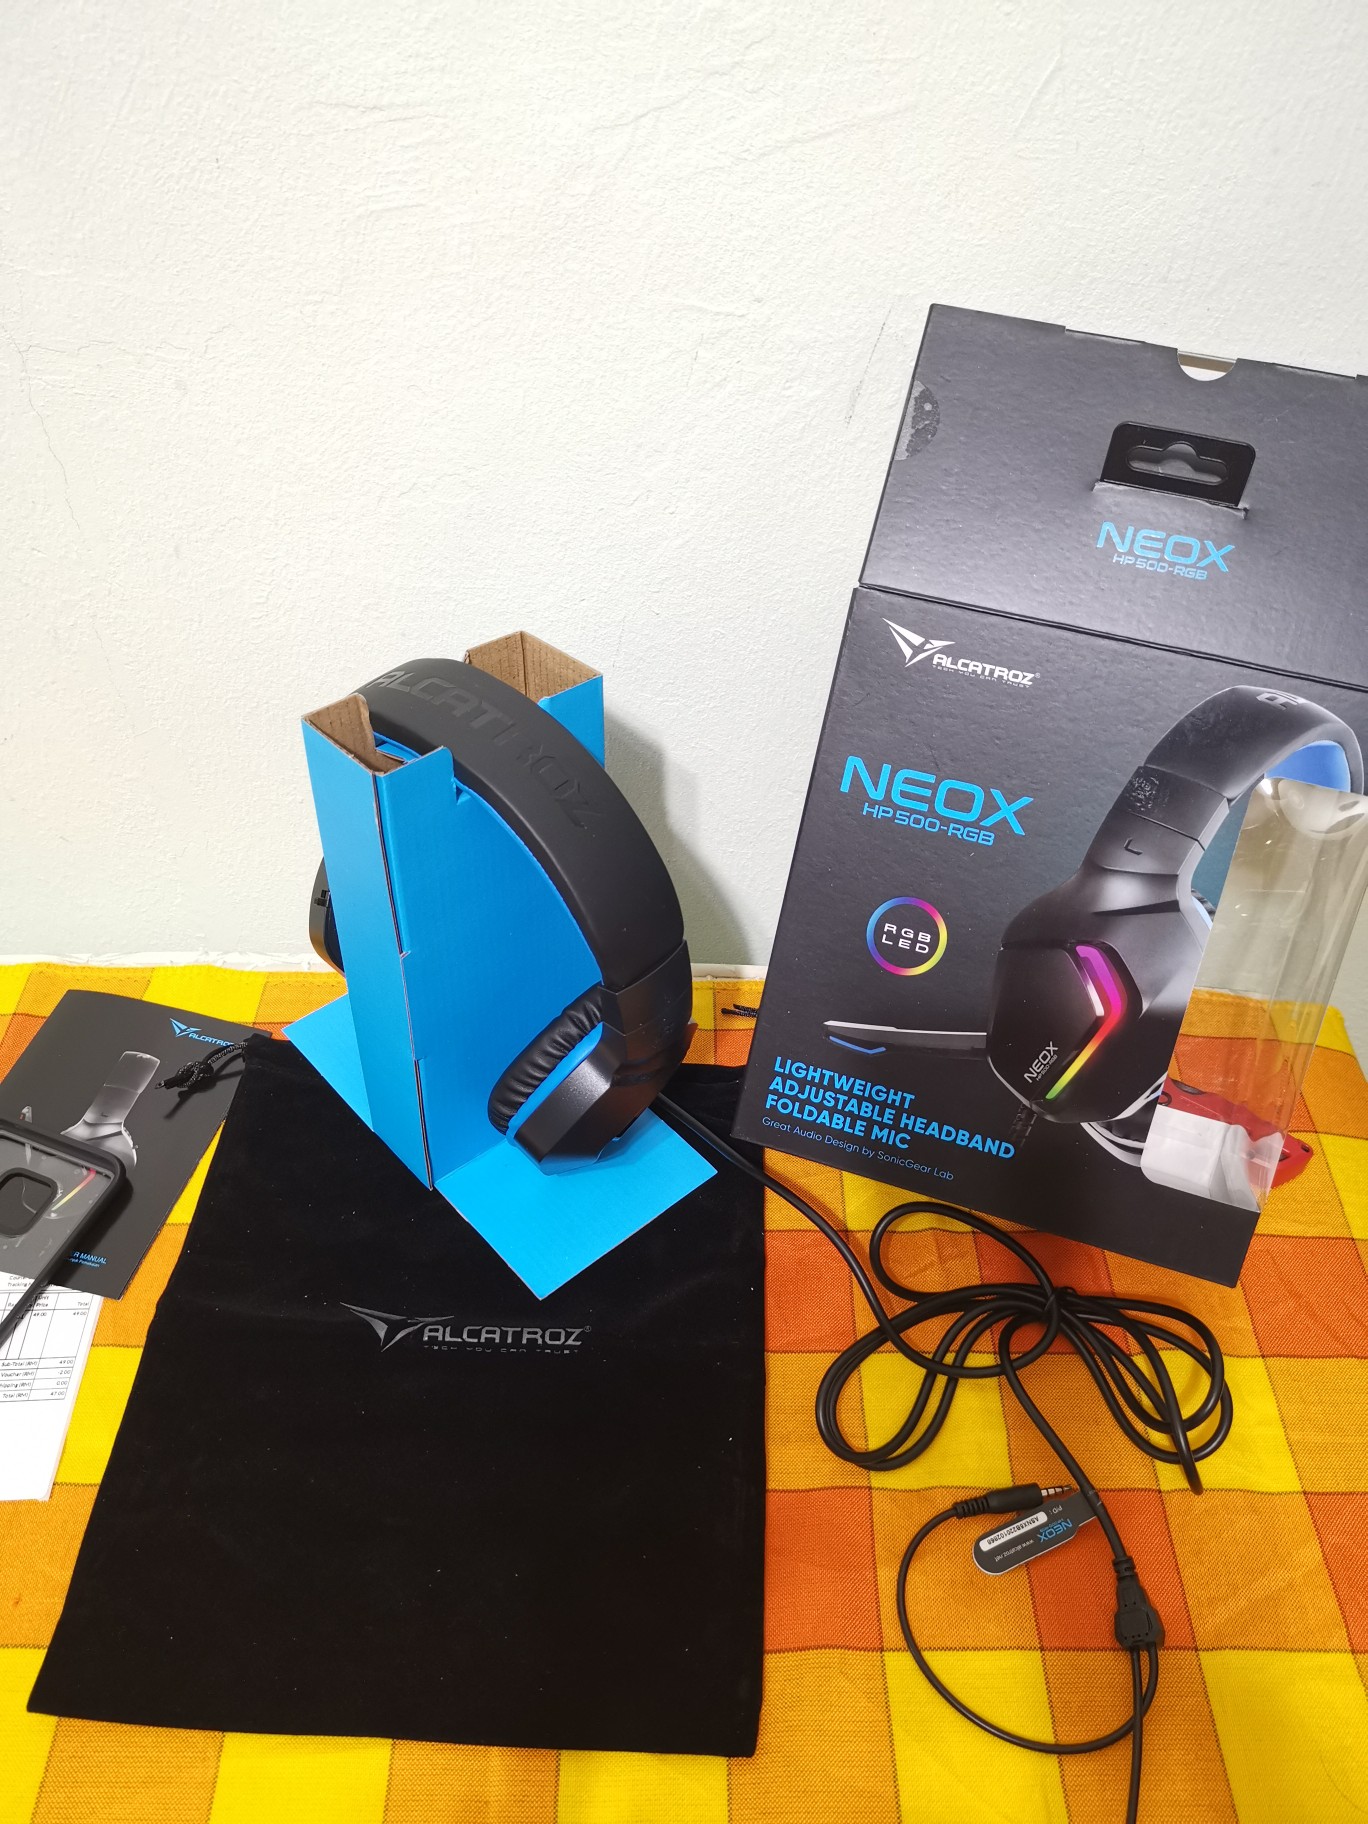 Alcatroz NEOX HP500 2.1 RGB Gaming Headset White Gray